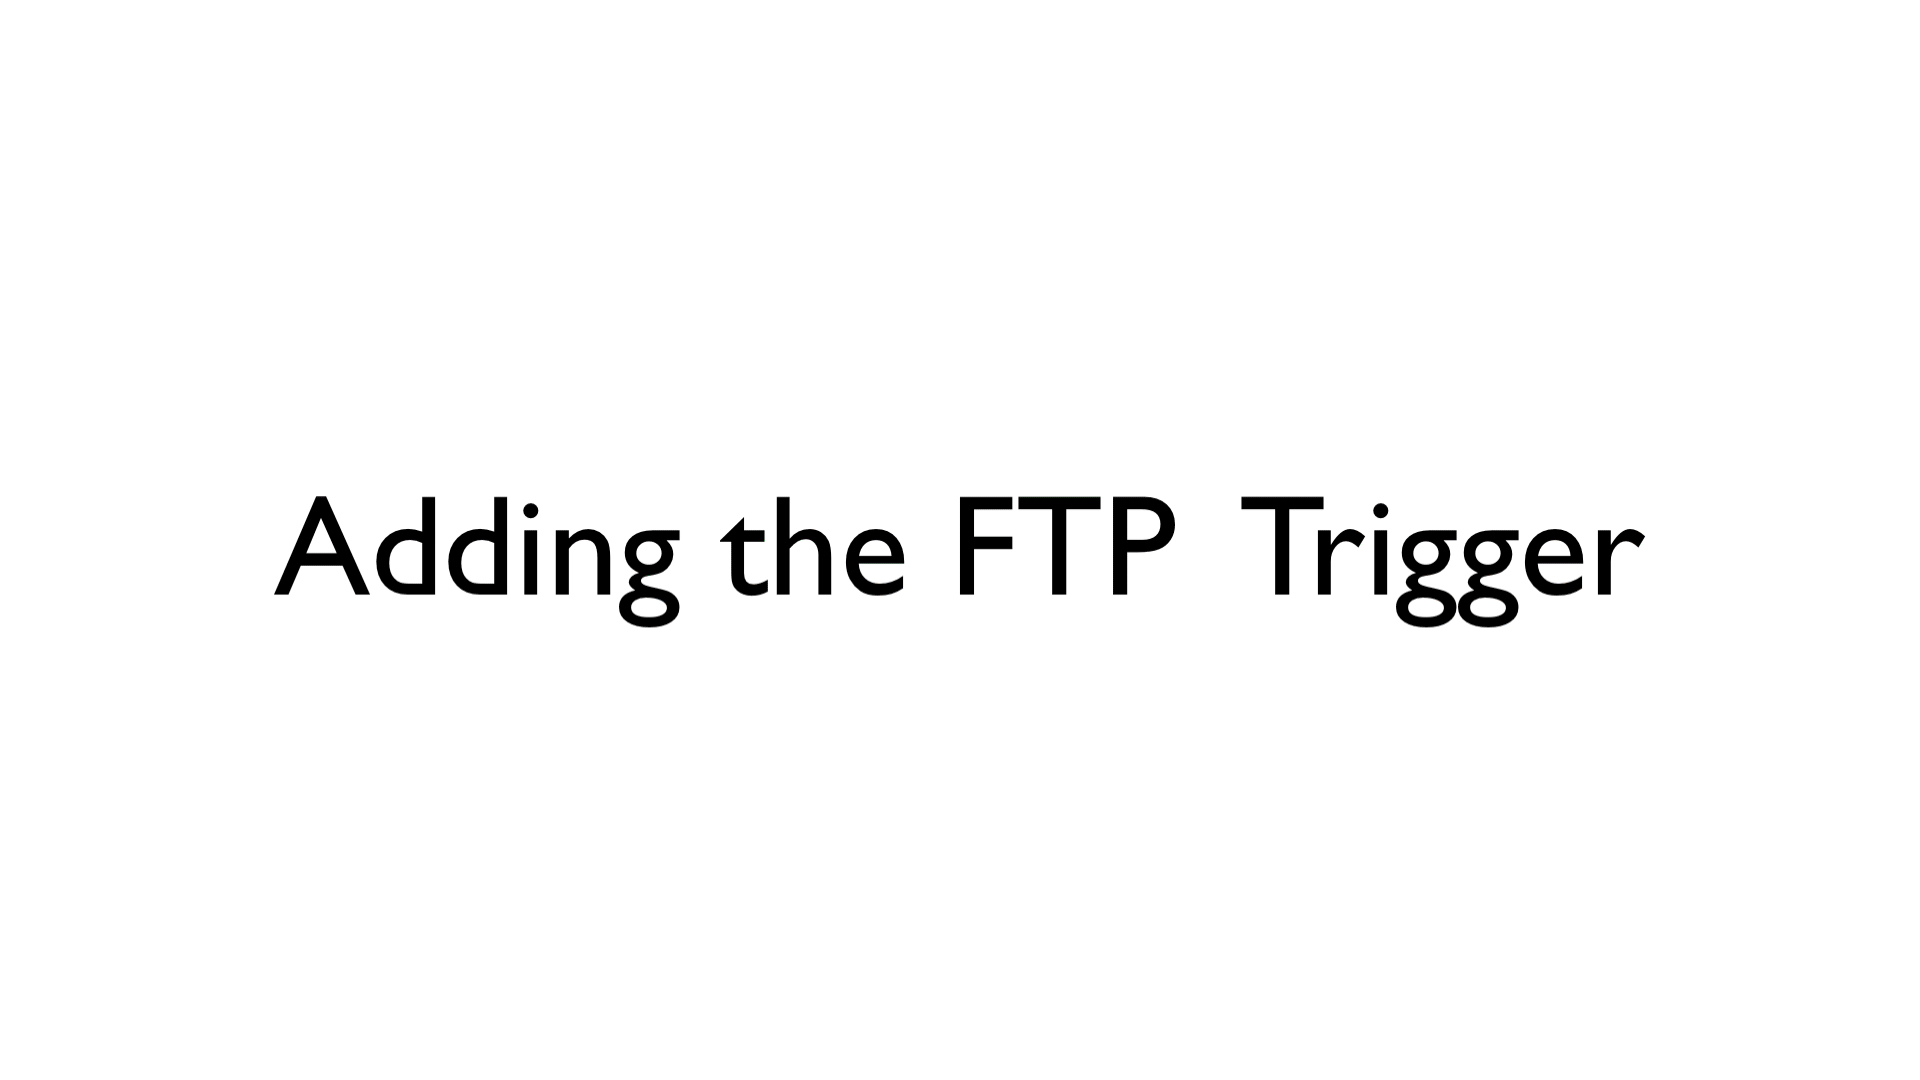 Adding FTP trigger